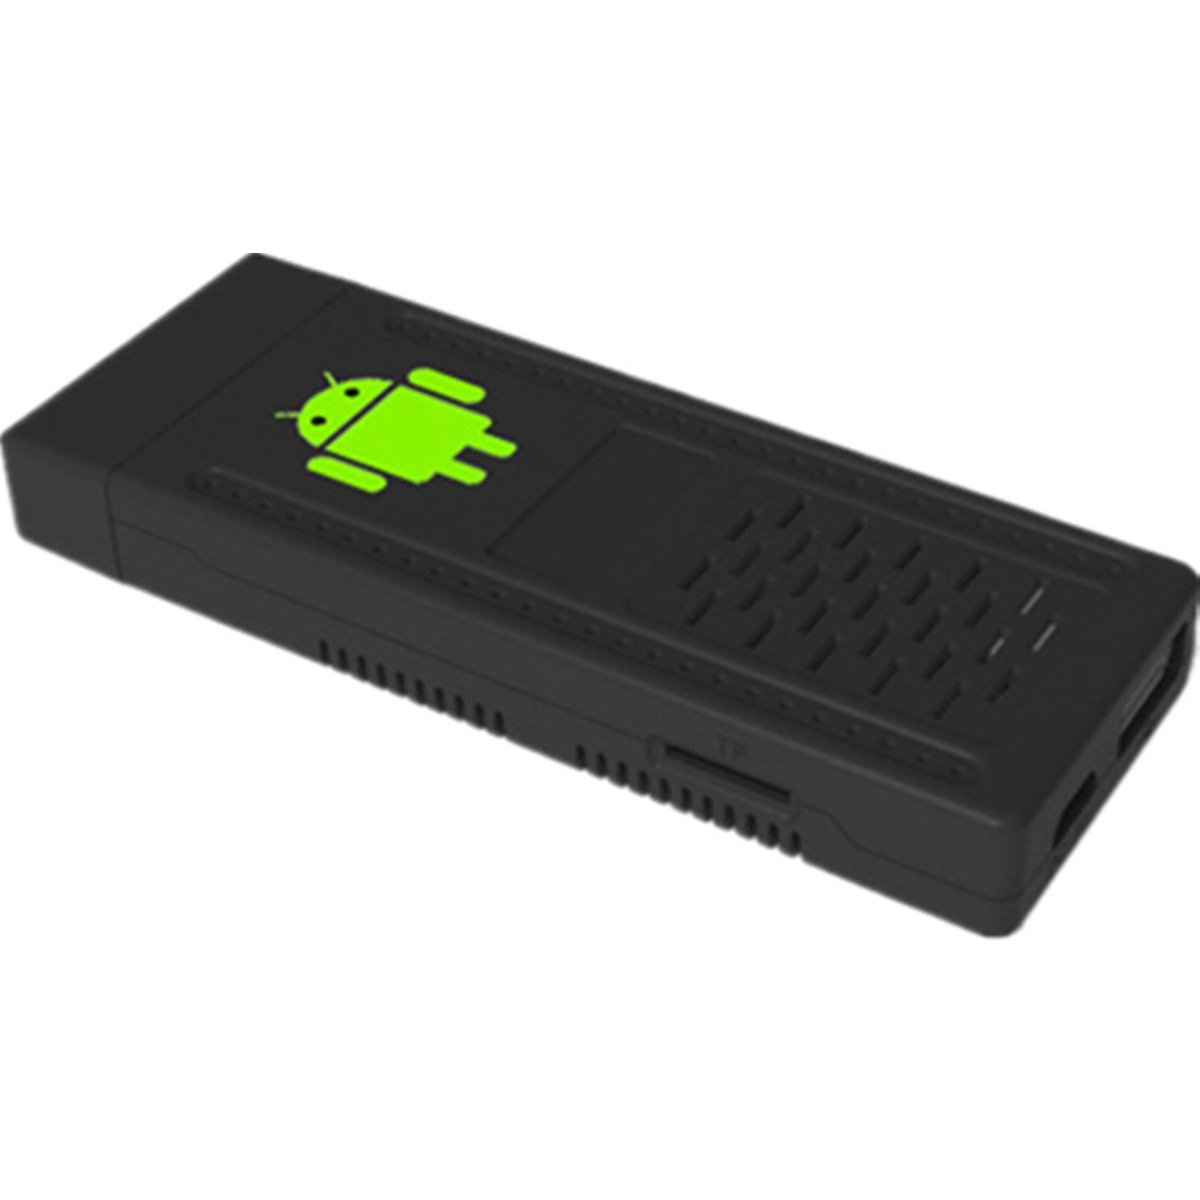 Android Mini PC UG802 RockChip RK3066